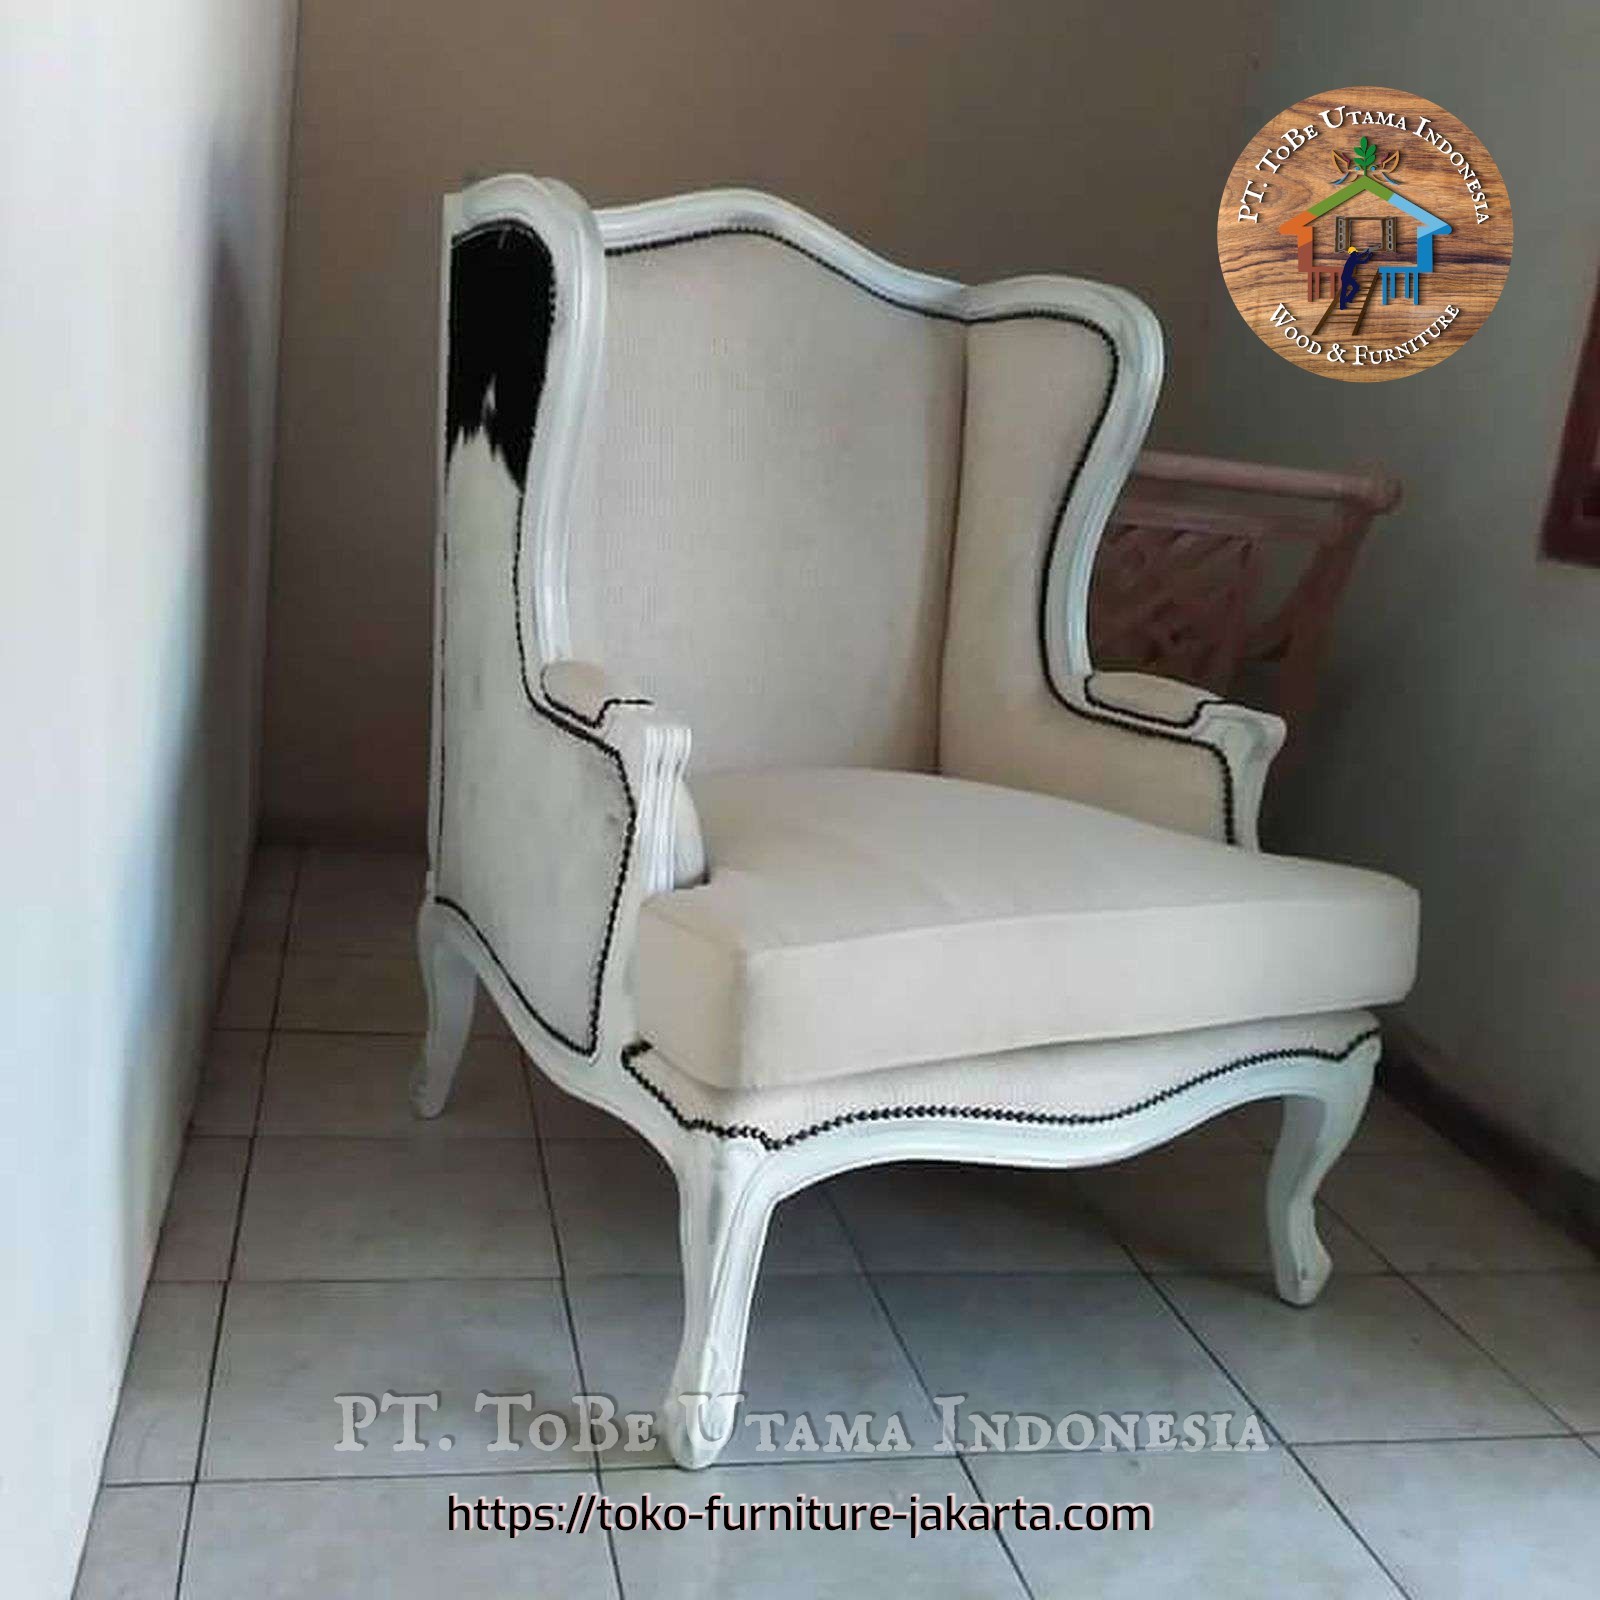 Living Room - Chairs: Sofa Jochen made of sponge, mahogany wood, fabric (image 1 of 1).